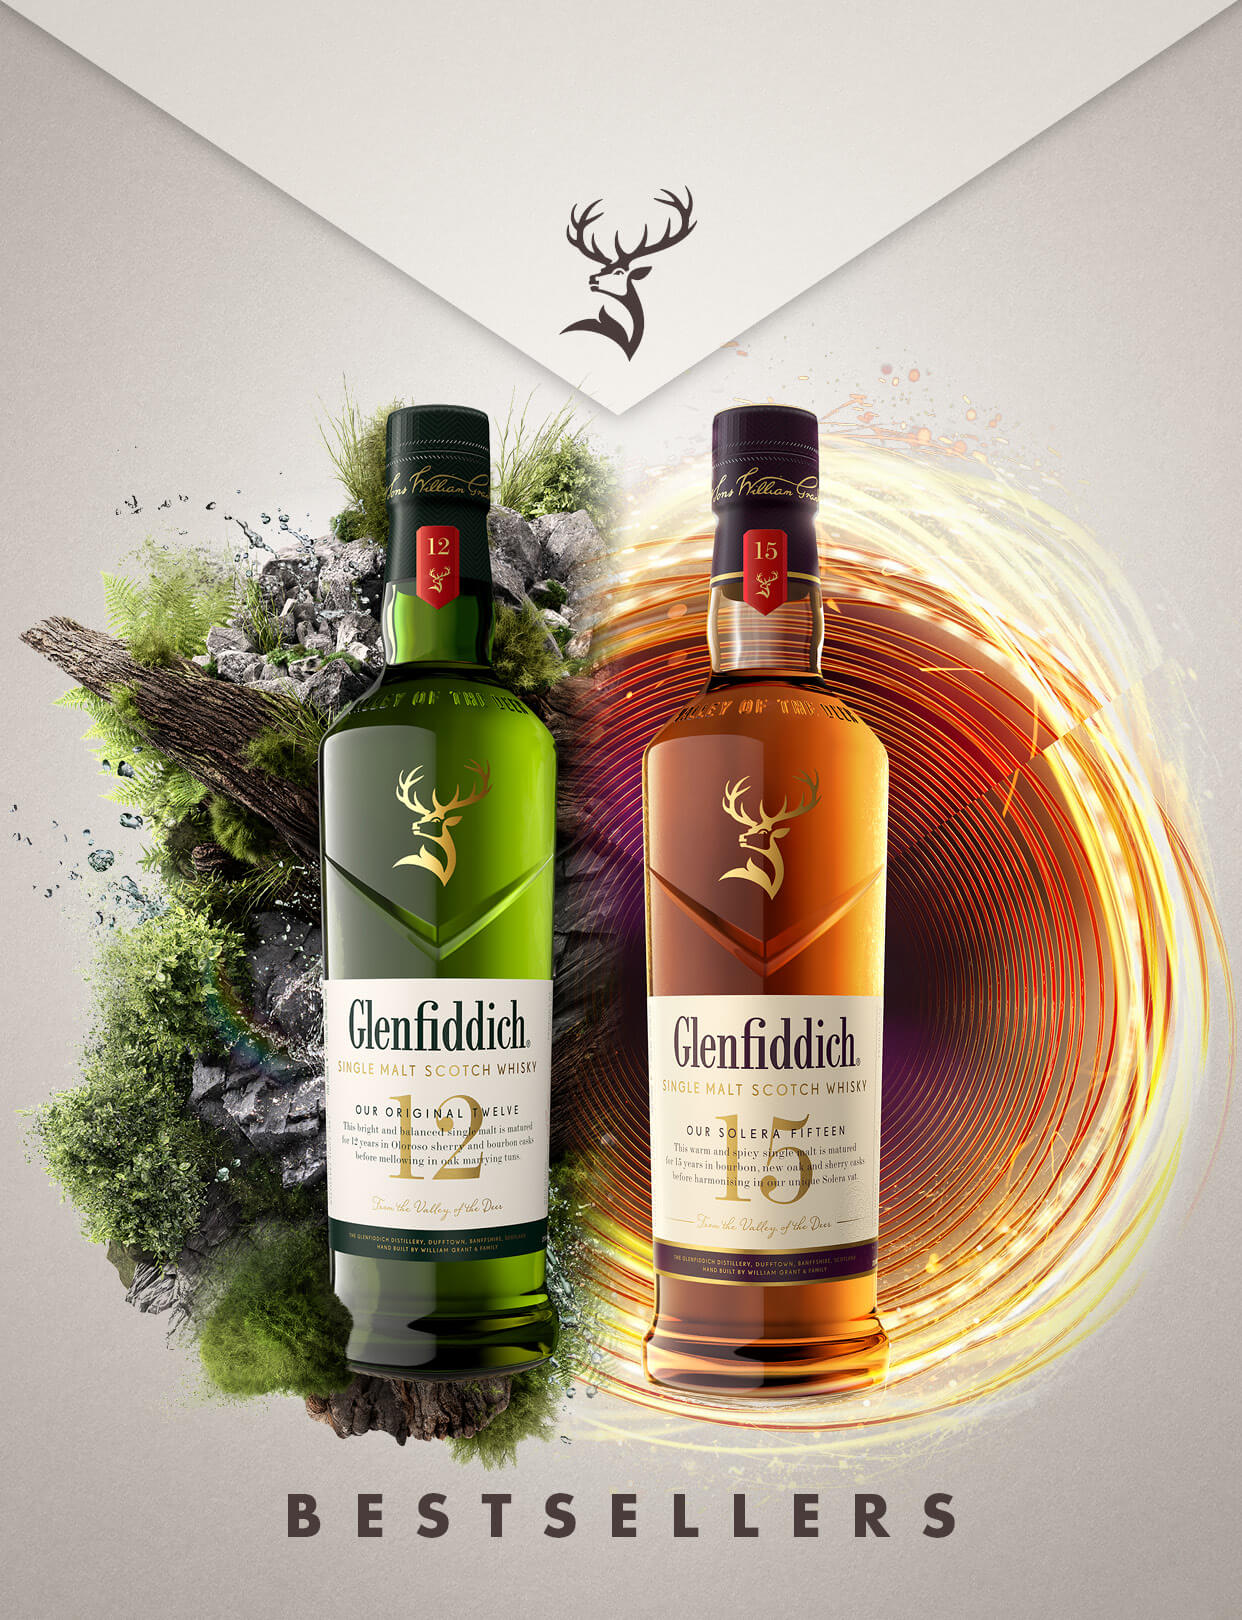 Glenfiddich Whisky Bestsellers